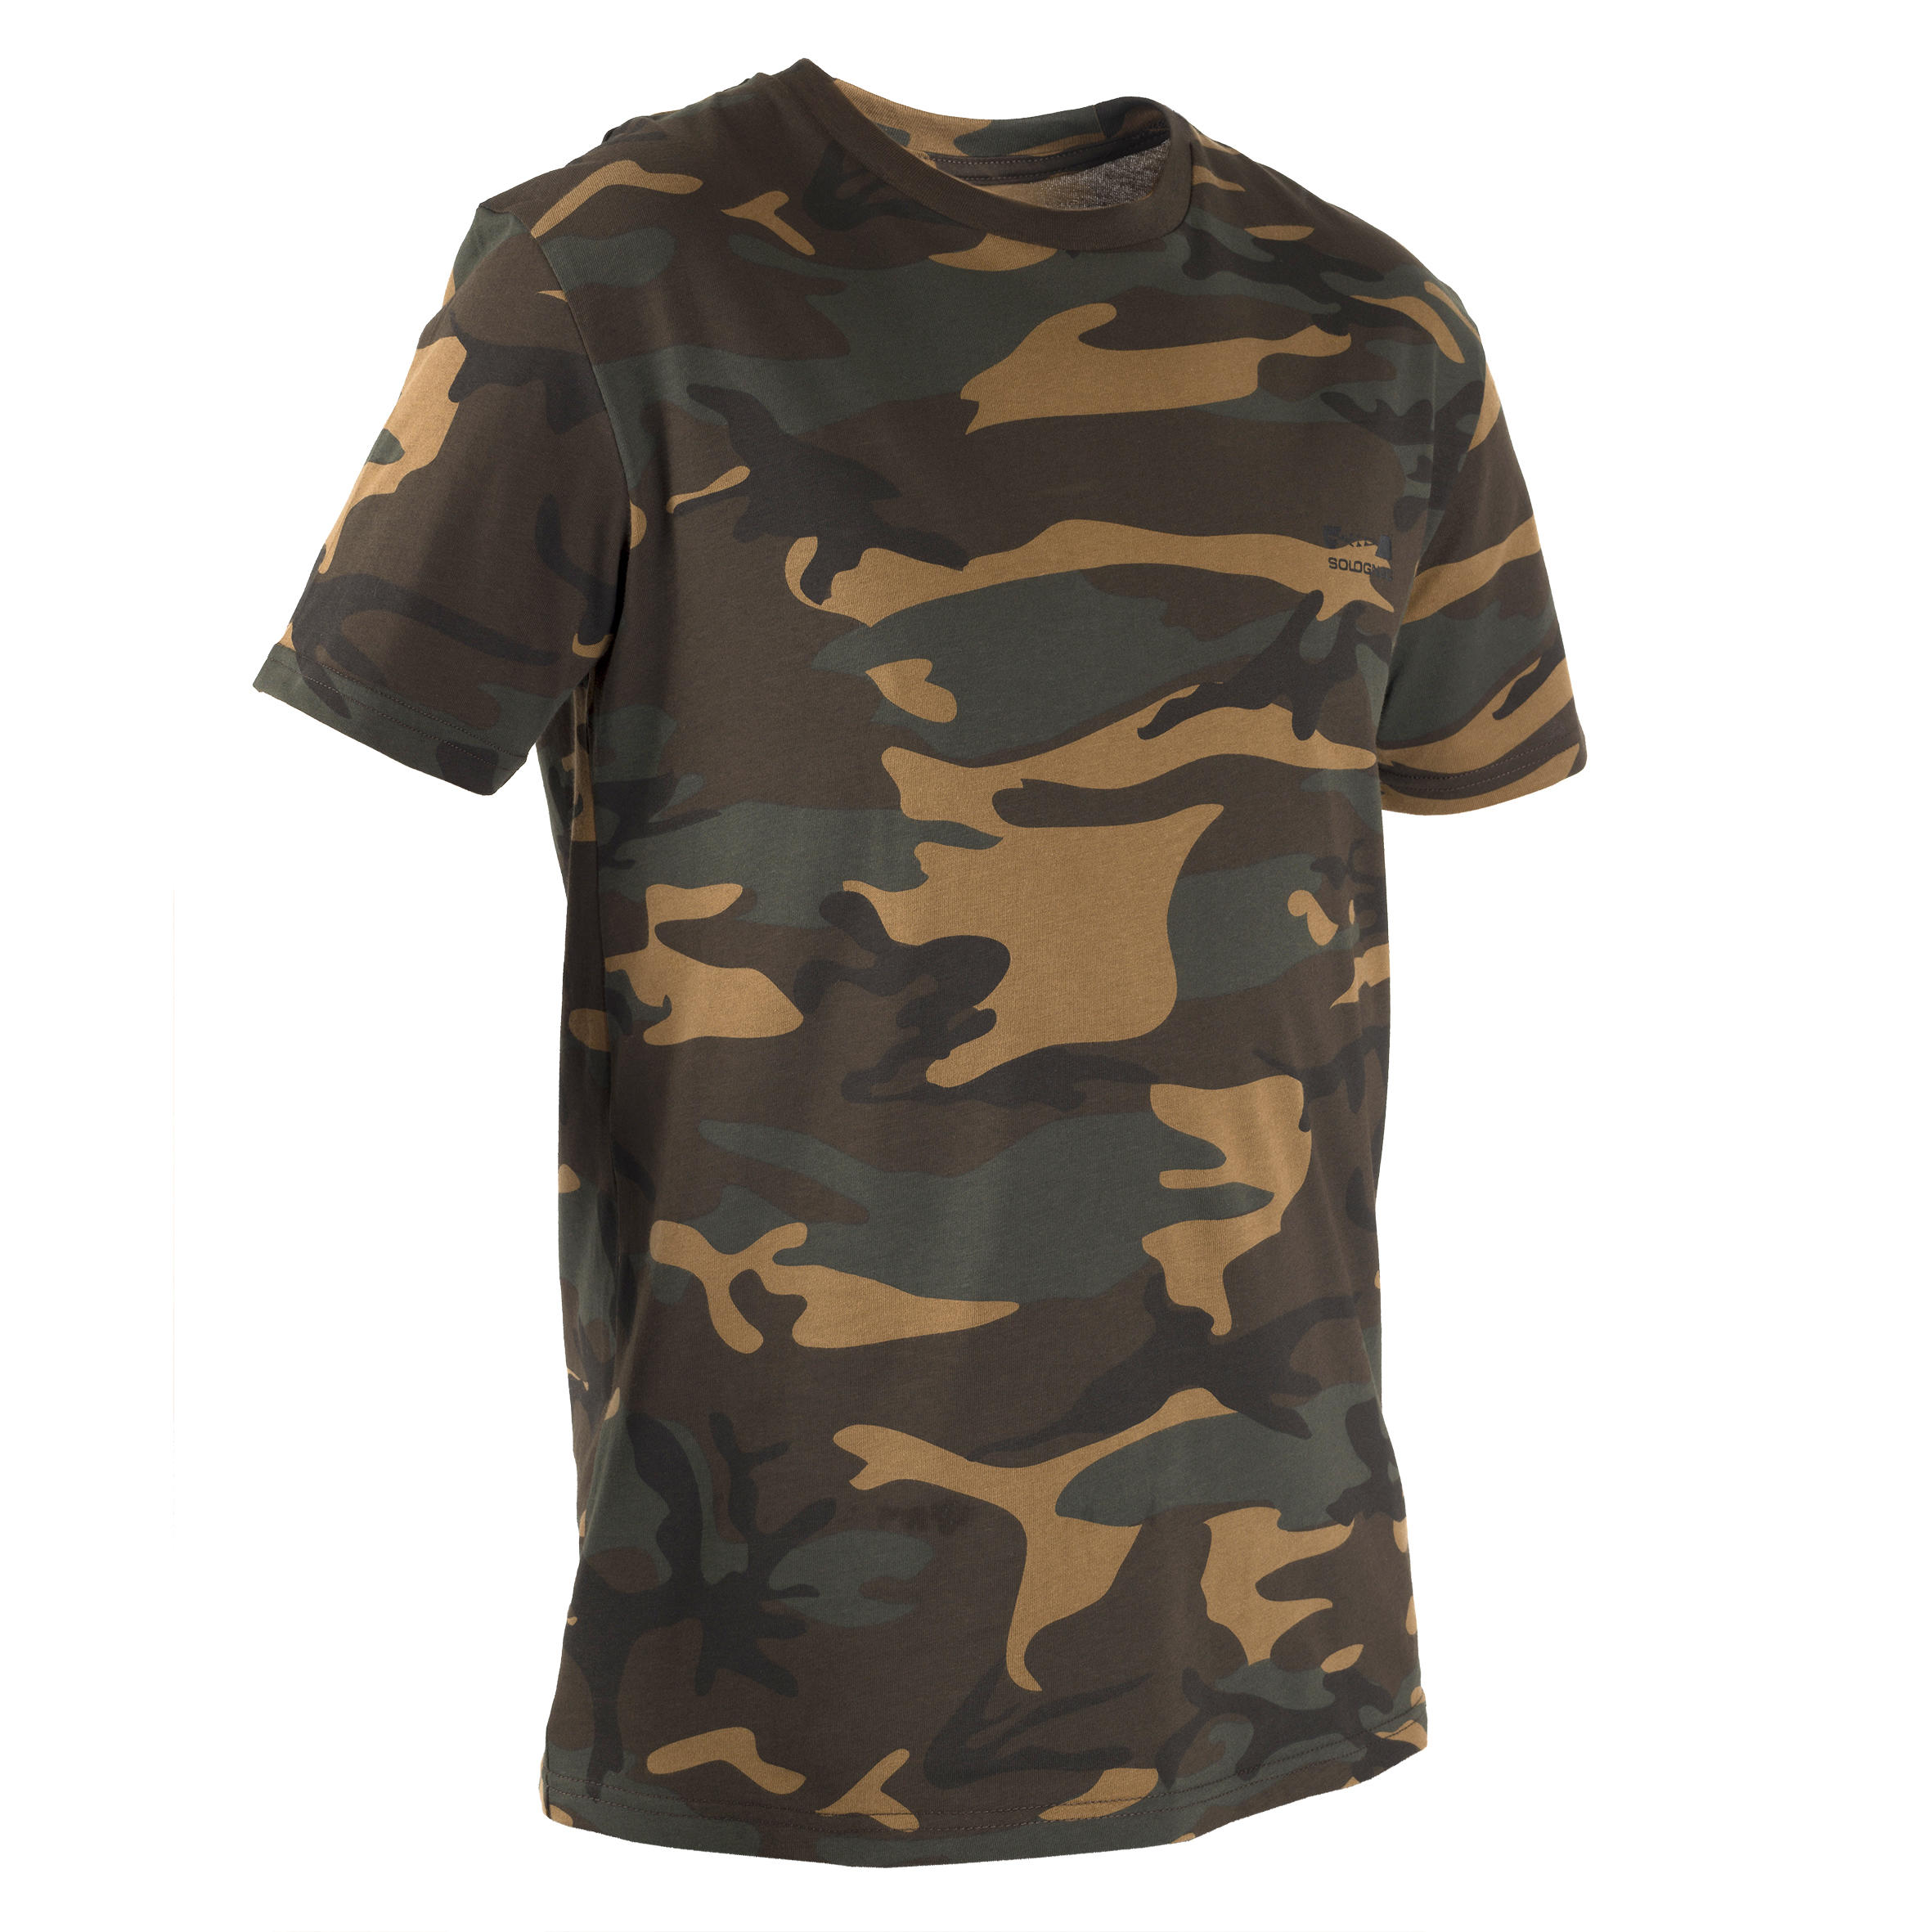 camouflage t shirt india